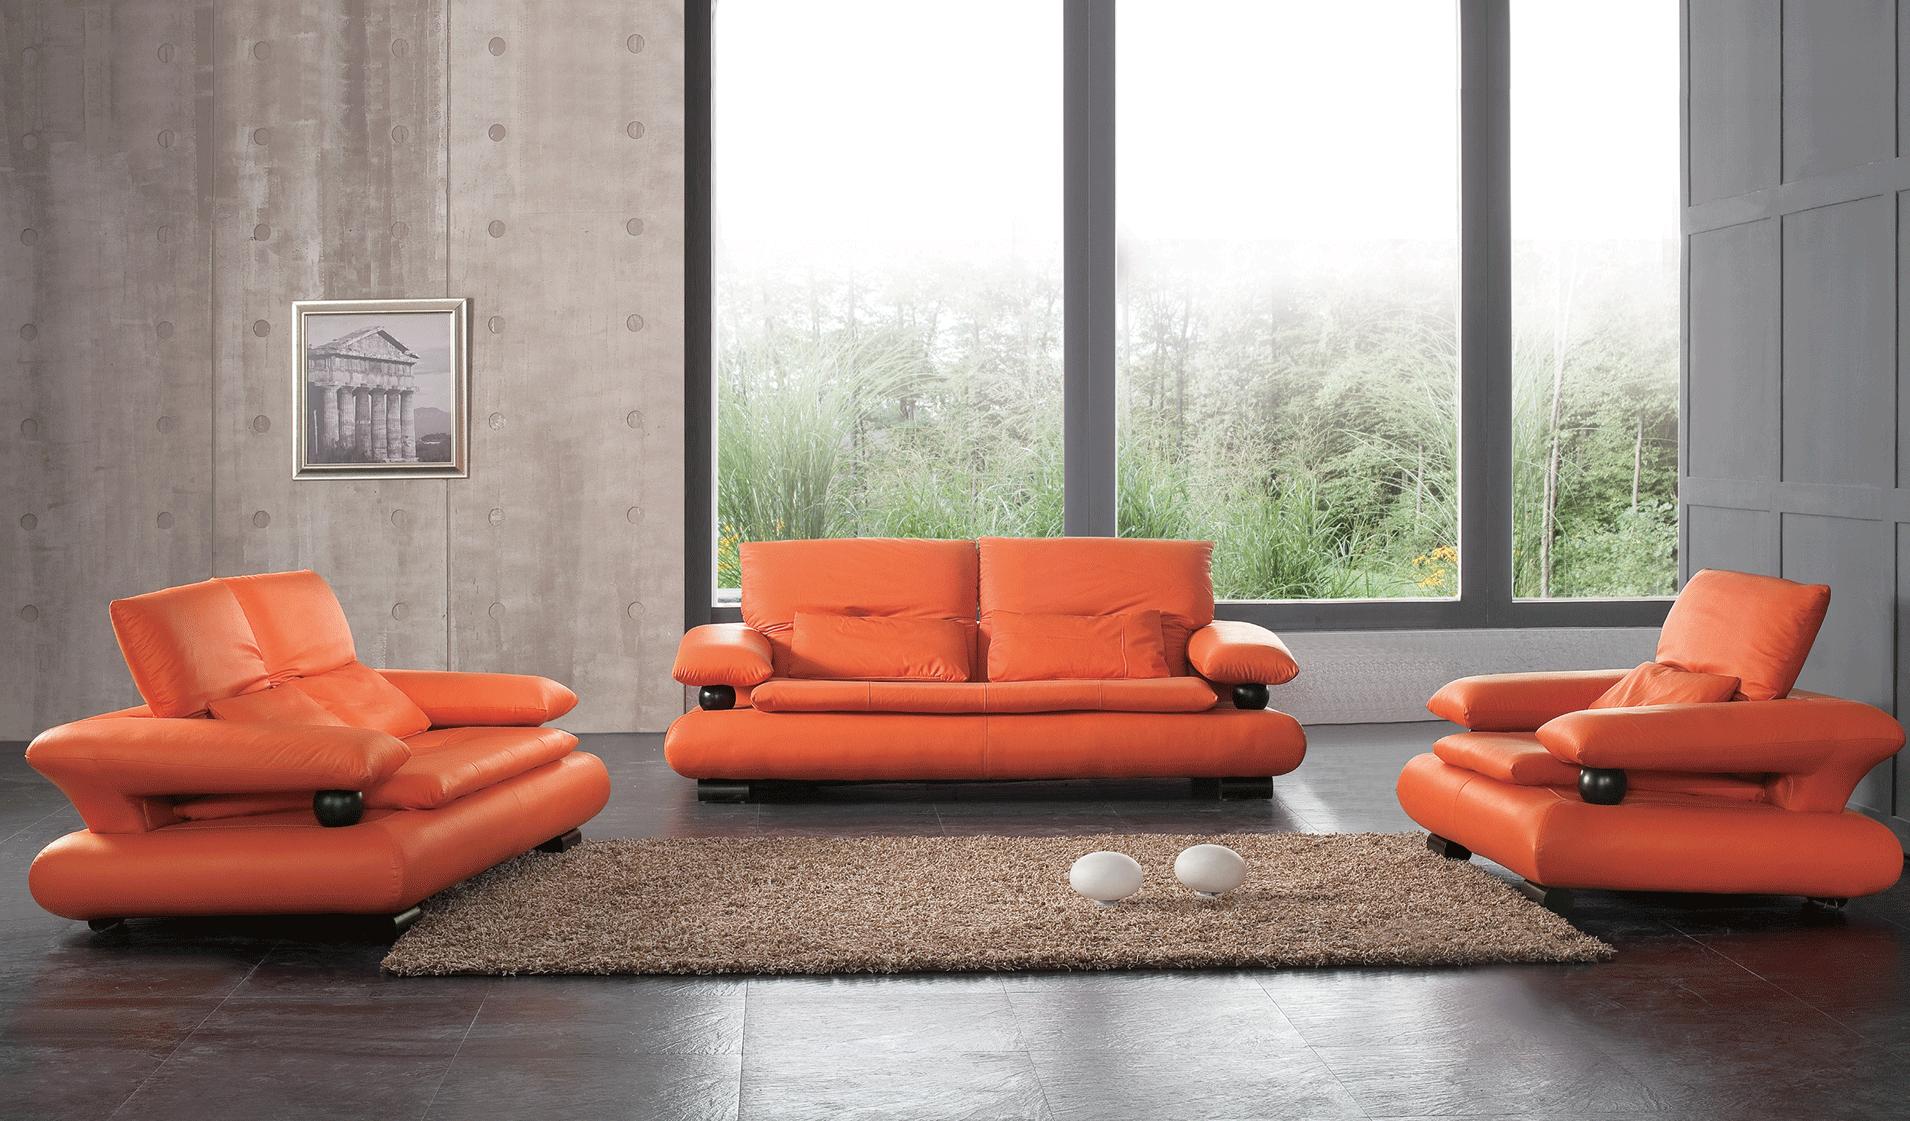 Contemporary Sofa Loveseat and Chair Set 410 410ORANGE-3PC in Orange Italian Leather